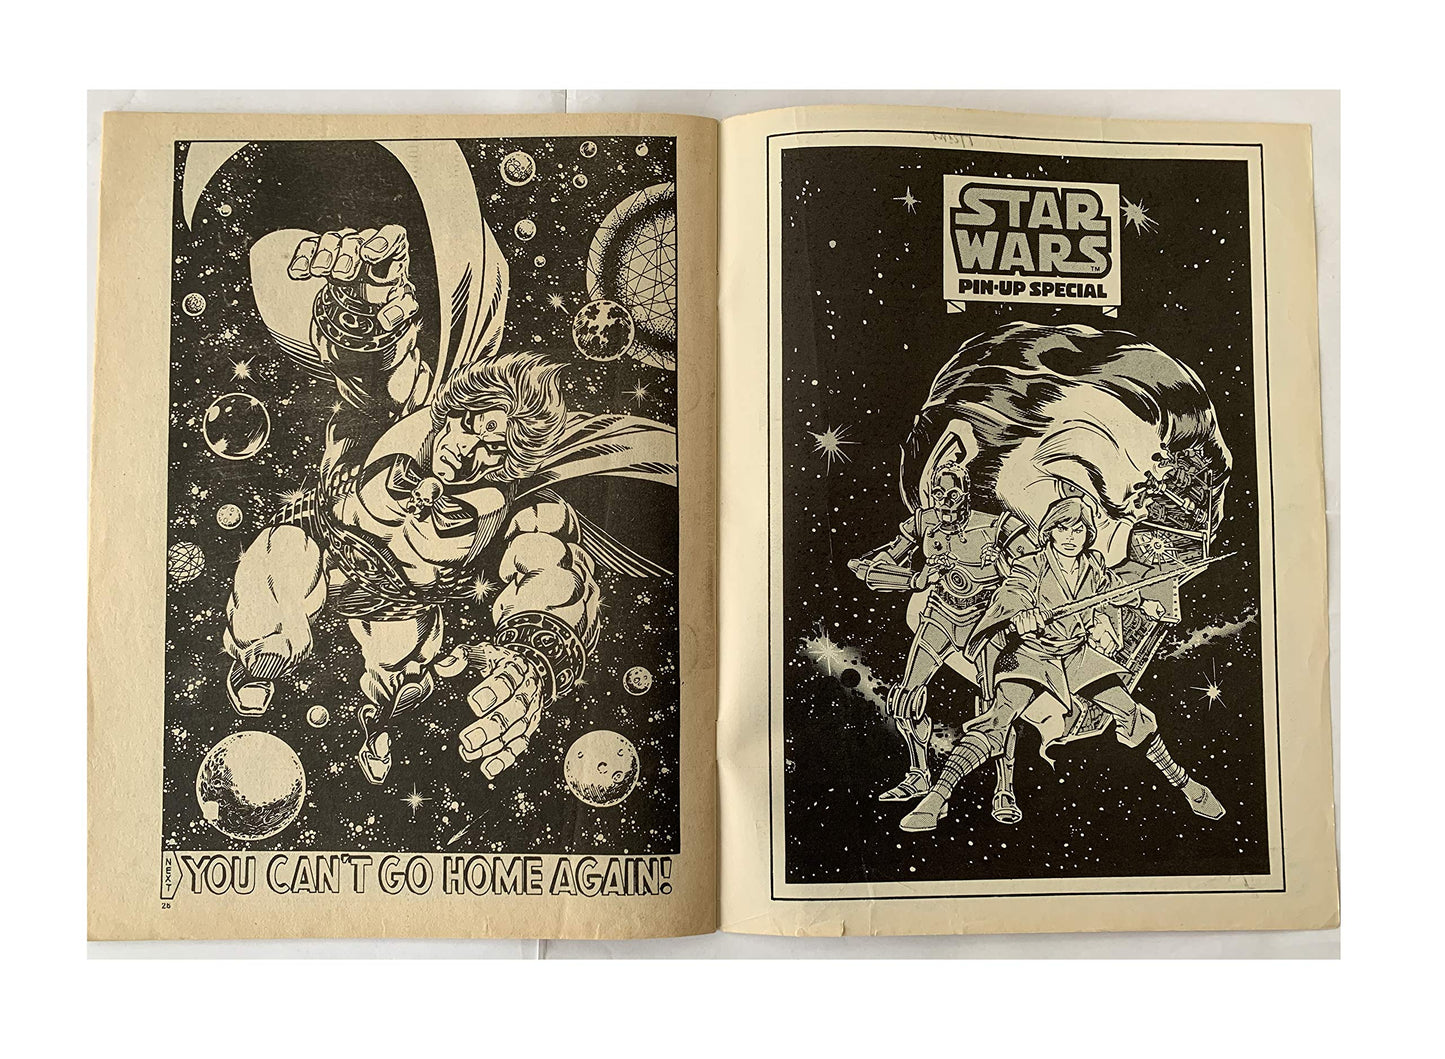 Vintage Star Wars Weekly Comic Issue Number 70 Marvel Comics June 27th 1979